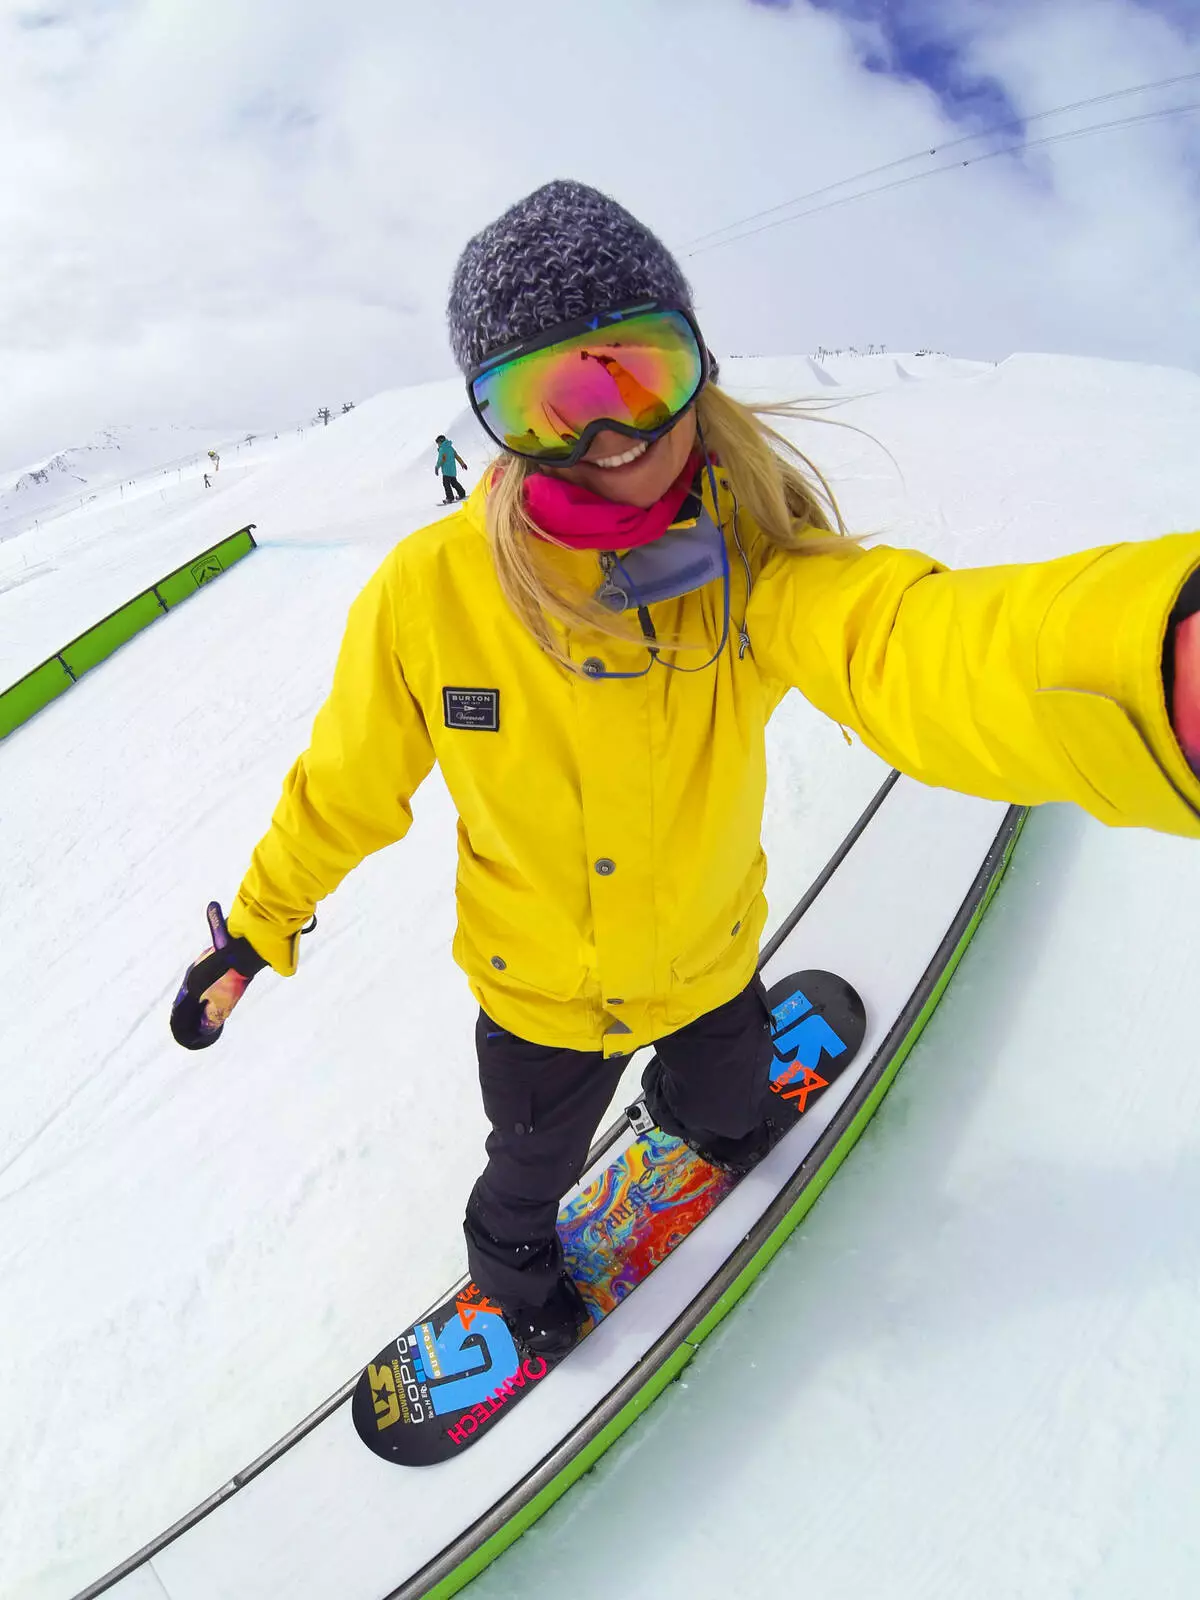 Botas de Snowboard (119 fotos): Como escolher botas de snowboard para mulheres, modelo Nike, Adidas e outras marcas populares 15127_7